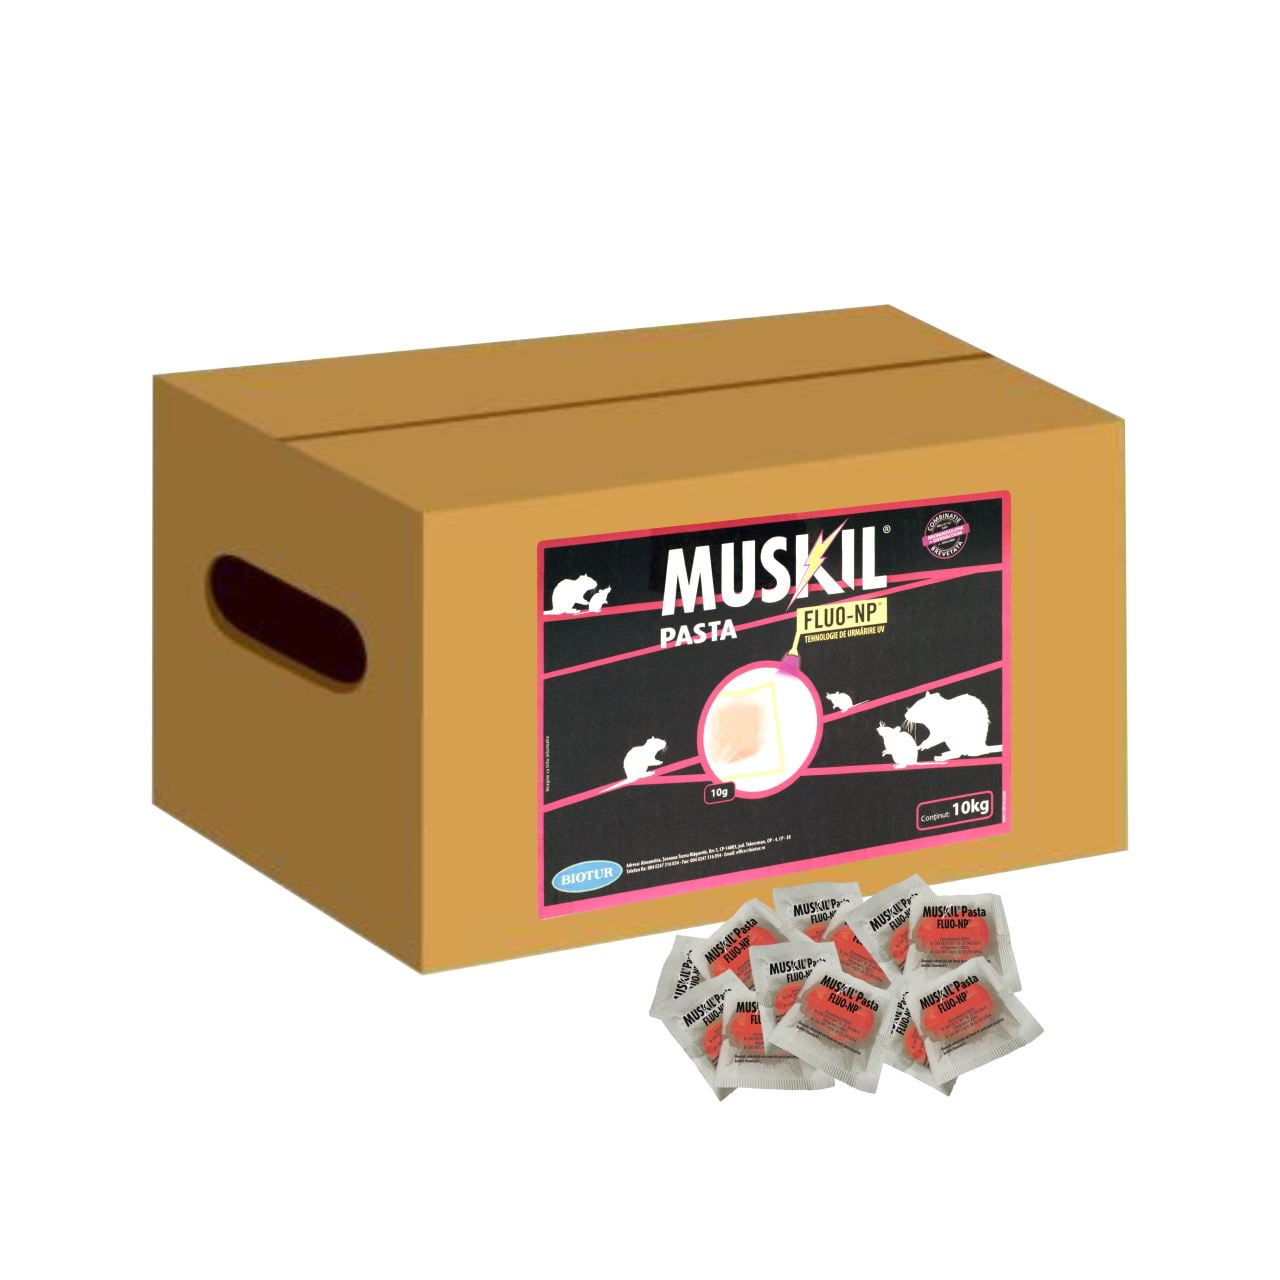 Muskil-pasta fluorescenta 10kg pret/cutie